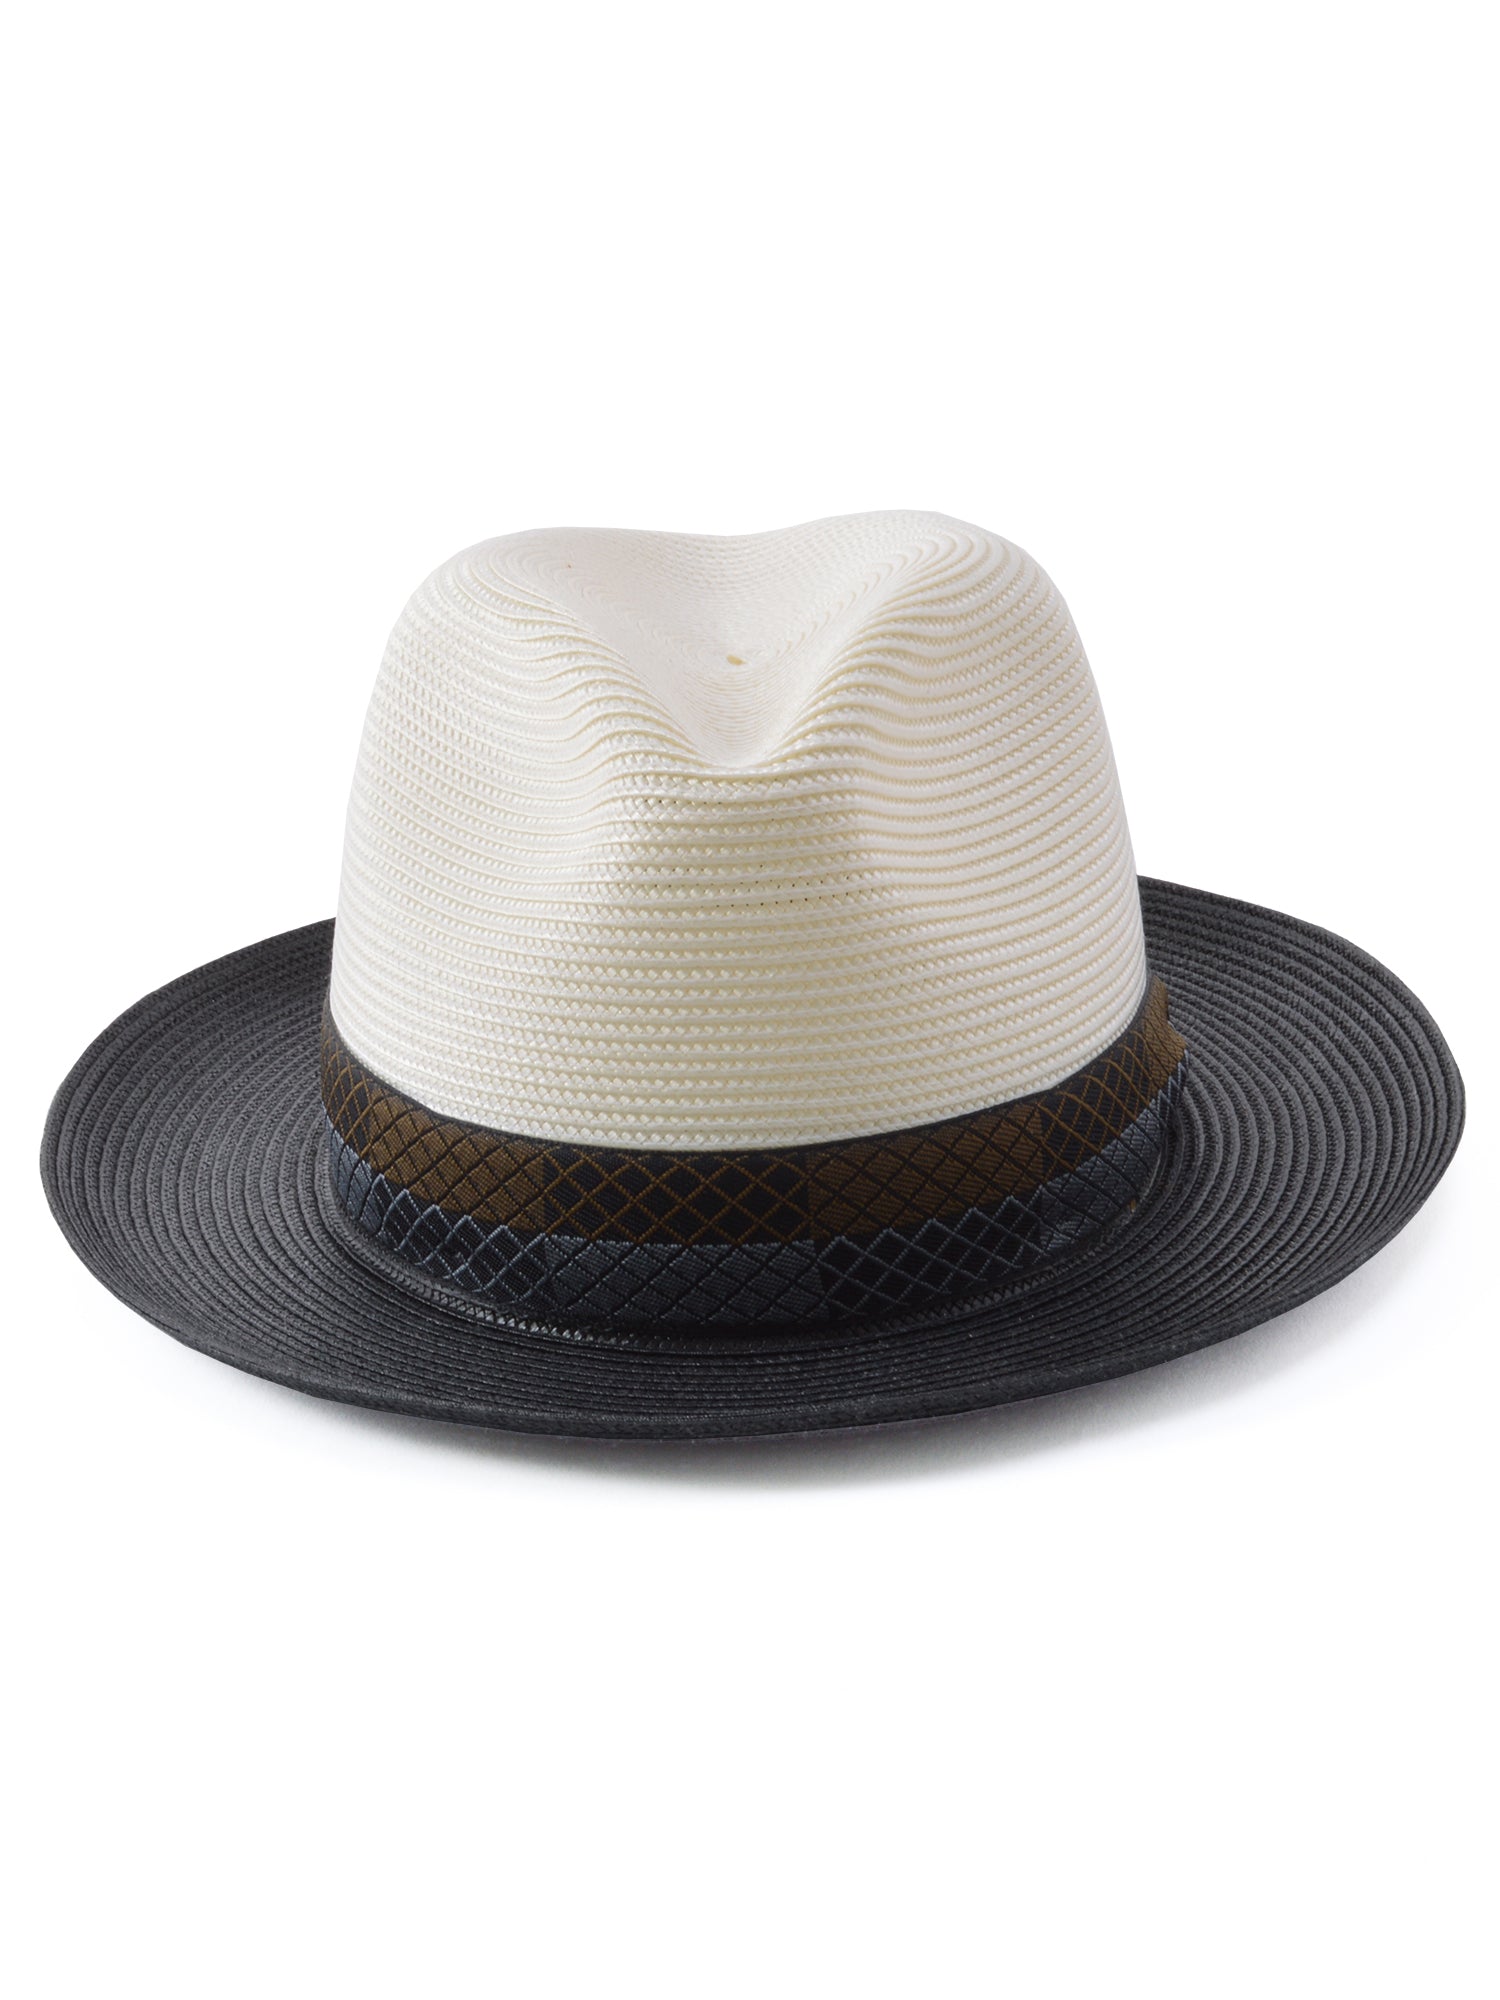 Stetson Andover Florentine Milan Straw Hat in Ivory/Black